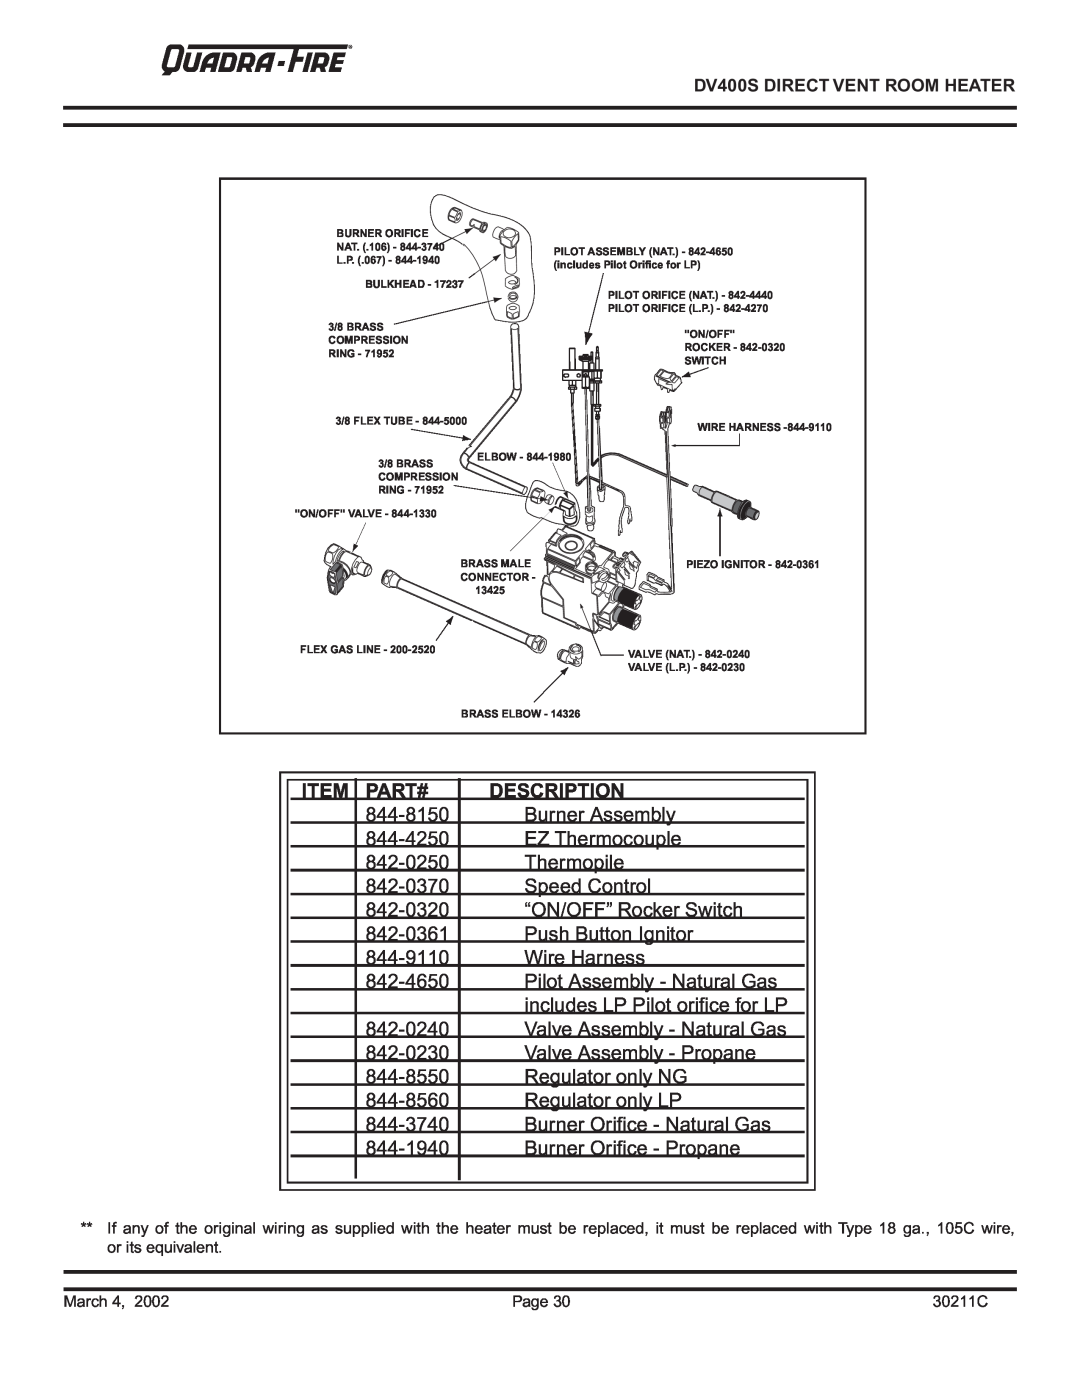 Quadra-Fire DV400S owner manual Part#, Description 